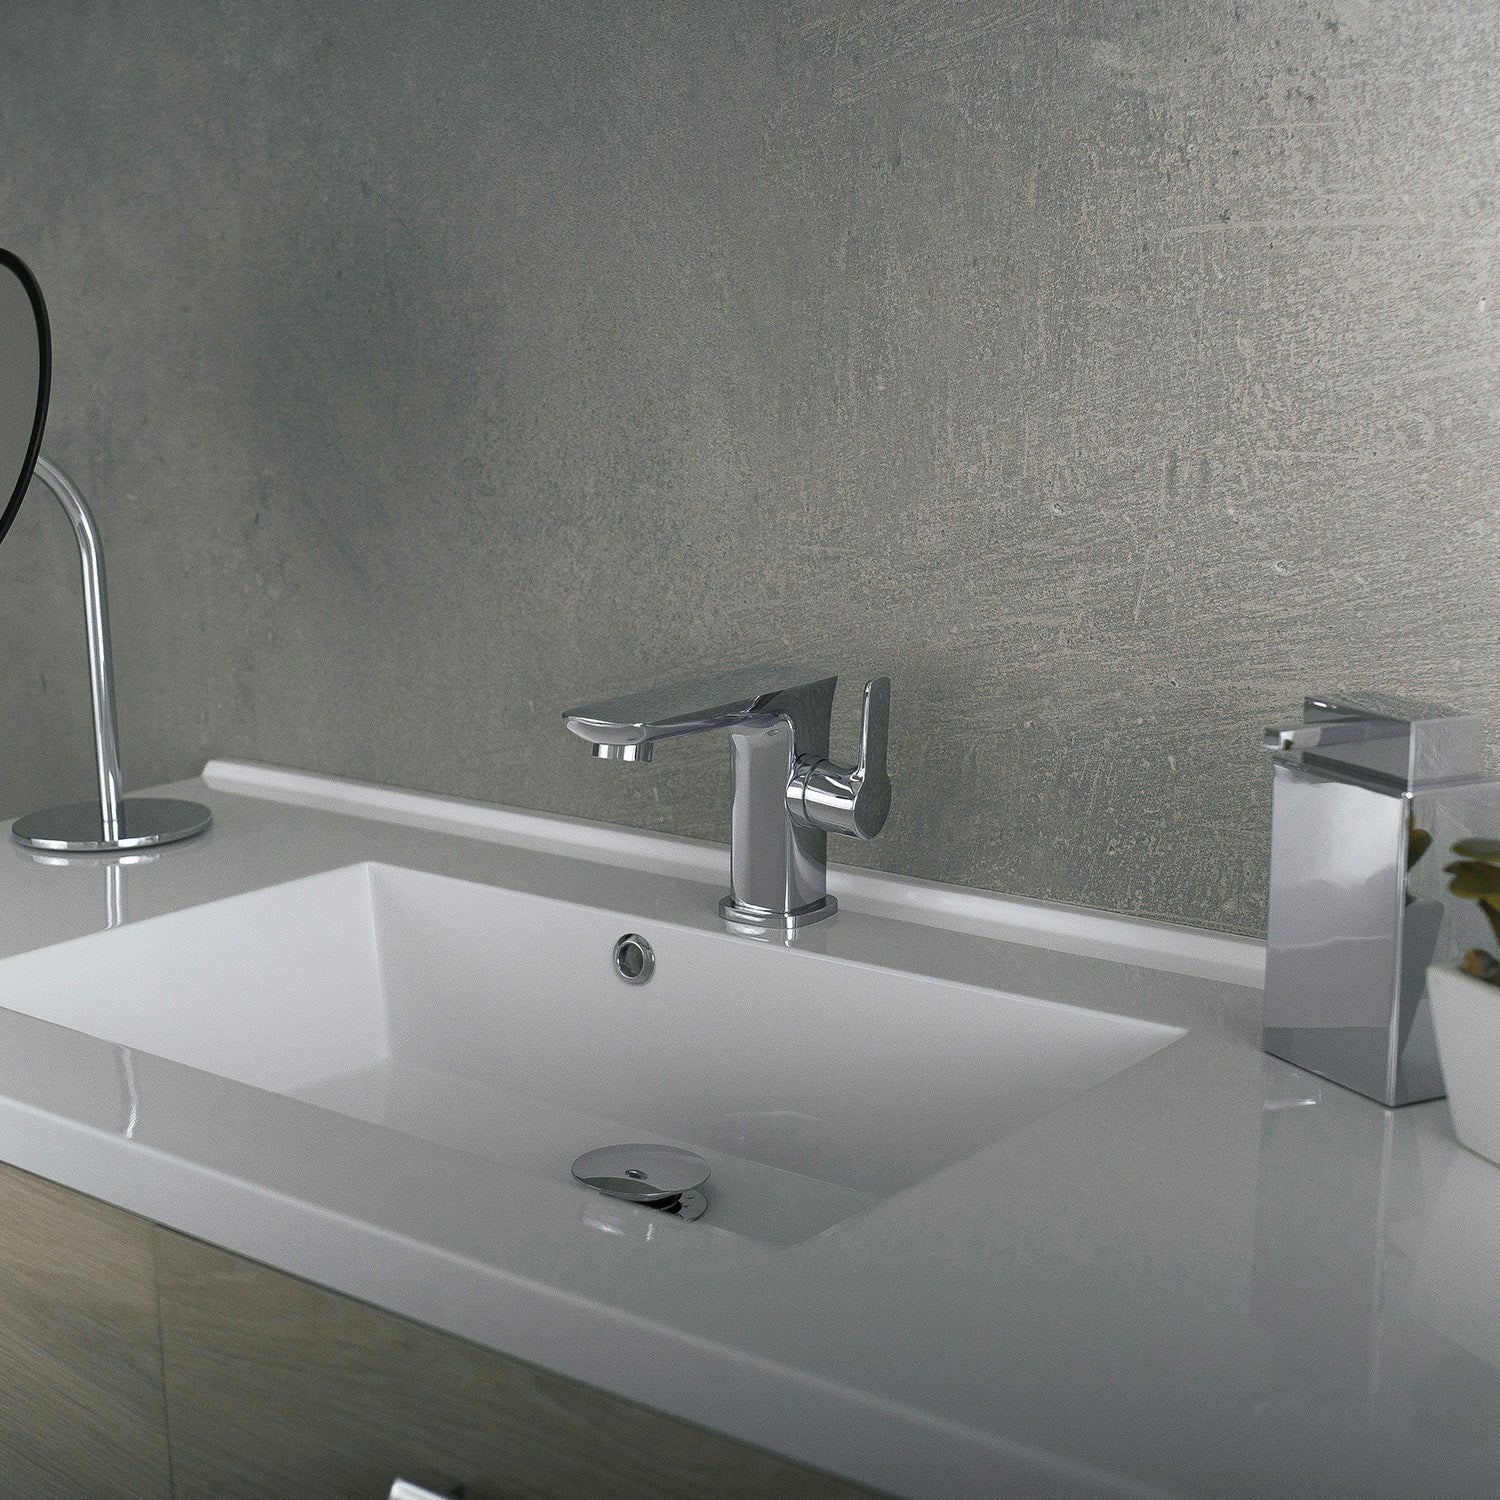 DAX Single Handle Bathroom Faucet, Brass Body, Chrome Finish, 4-3/4 x 3-15/16 Inches (DAX-9883)